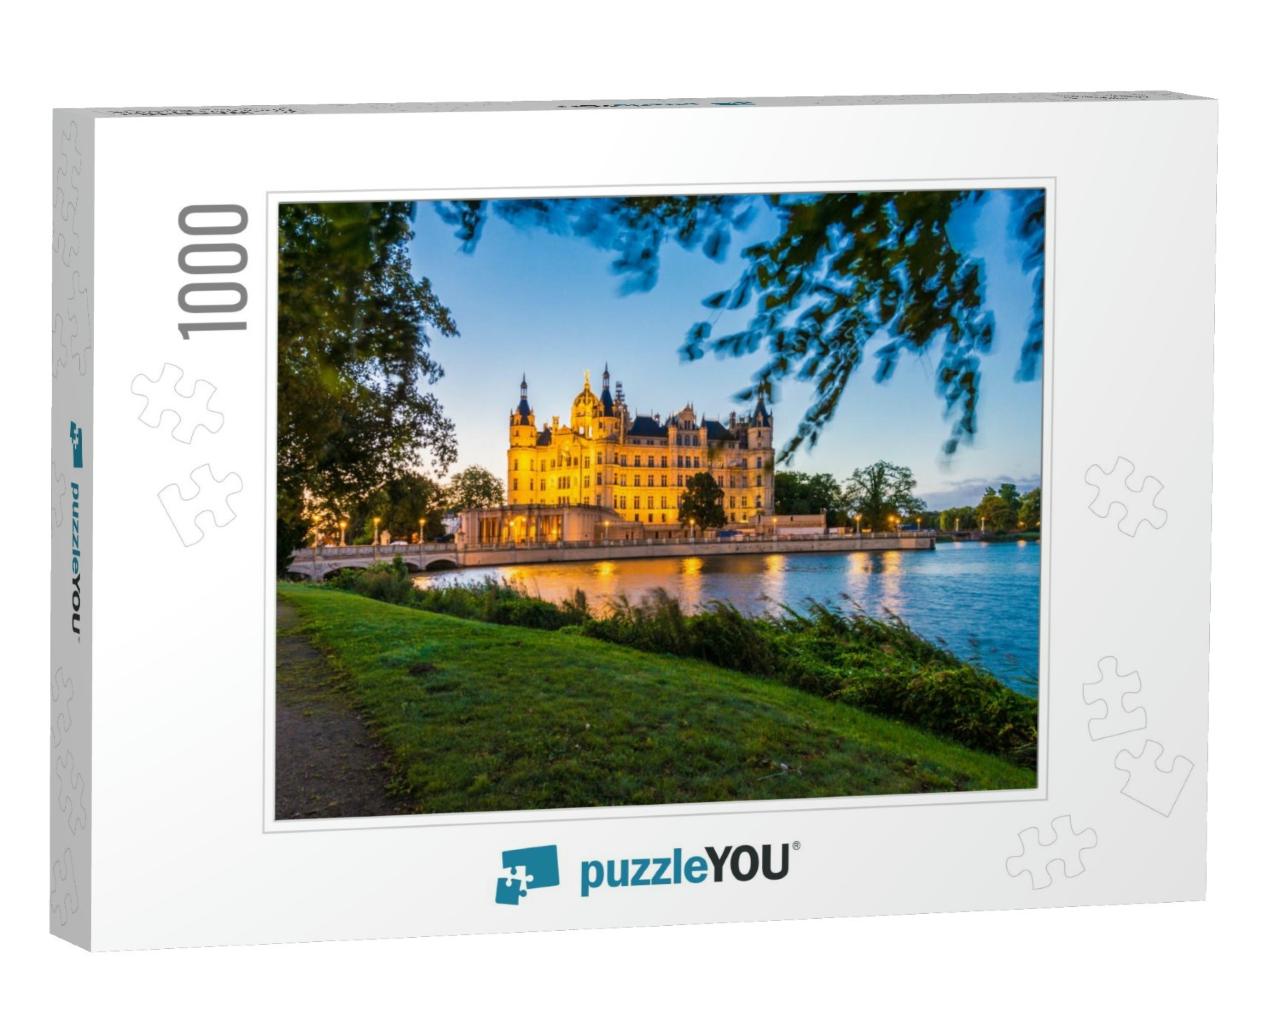 Schwerin Palace, or Schwerin Castle Schweriner Schloss, L... Jigsaw Puzzle with 1000 pieces